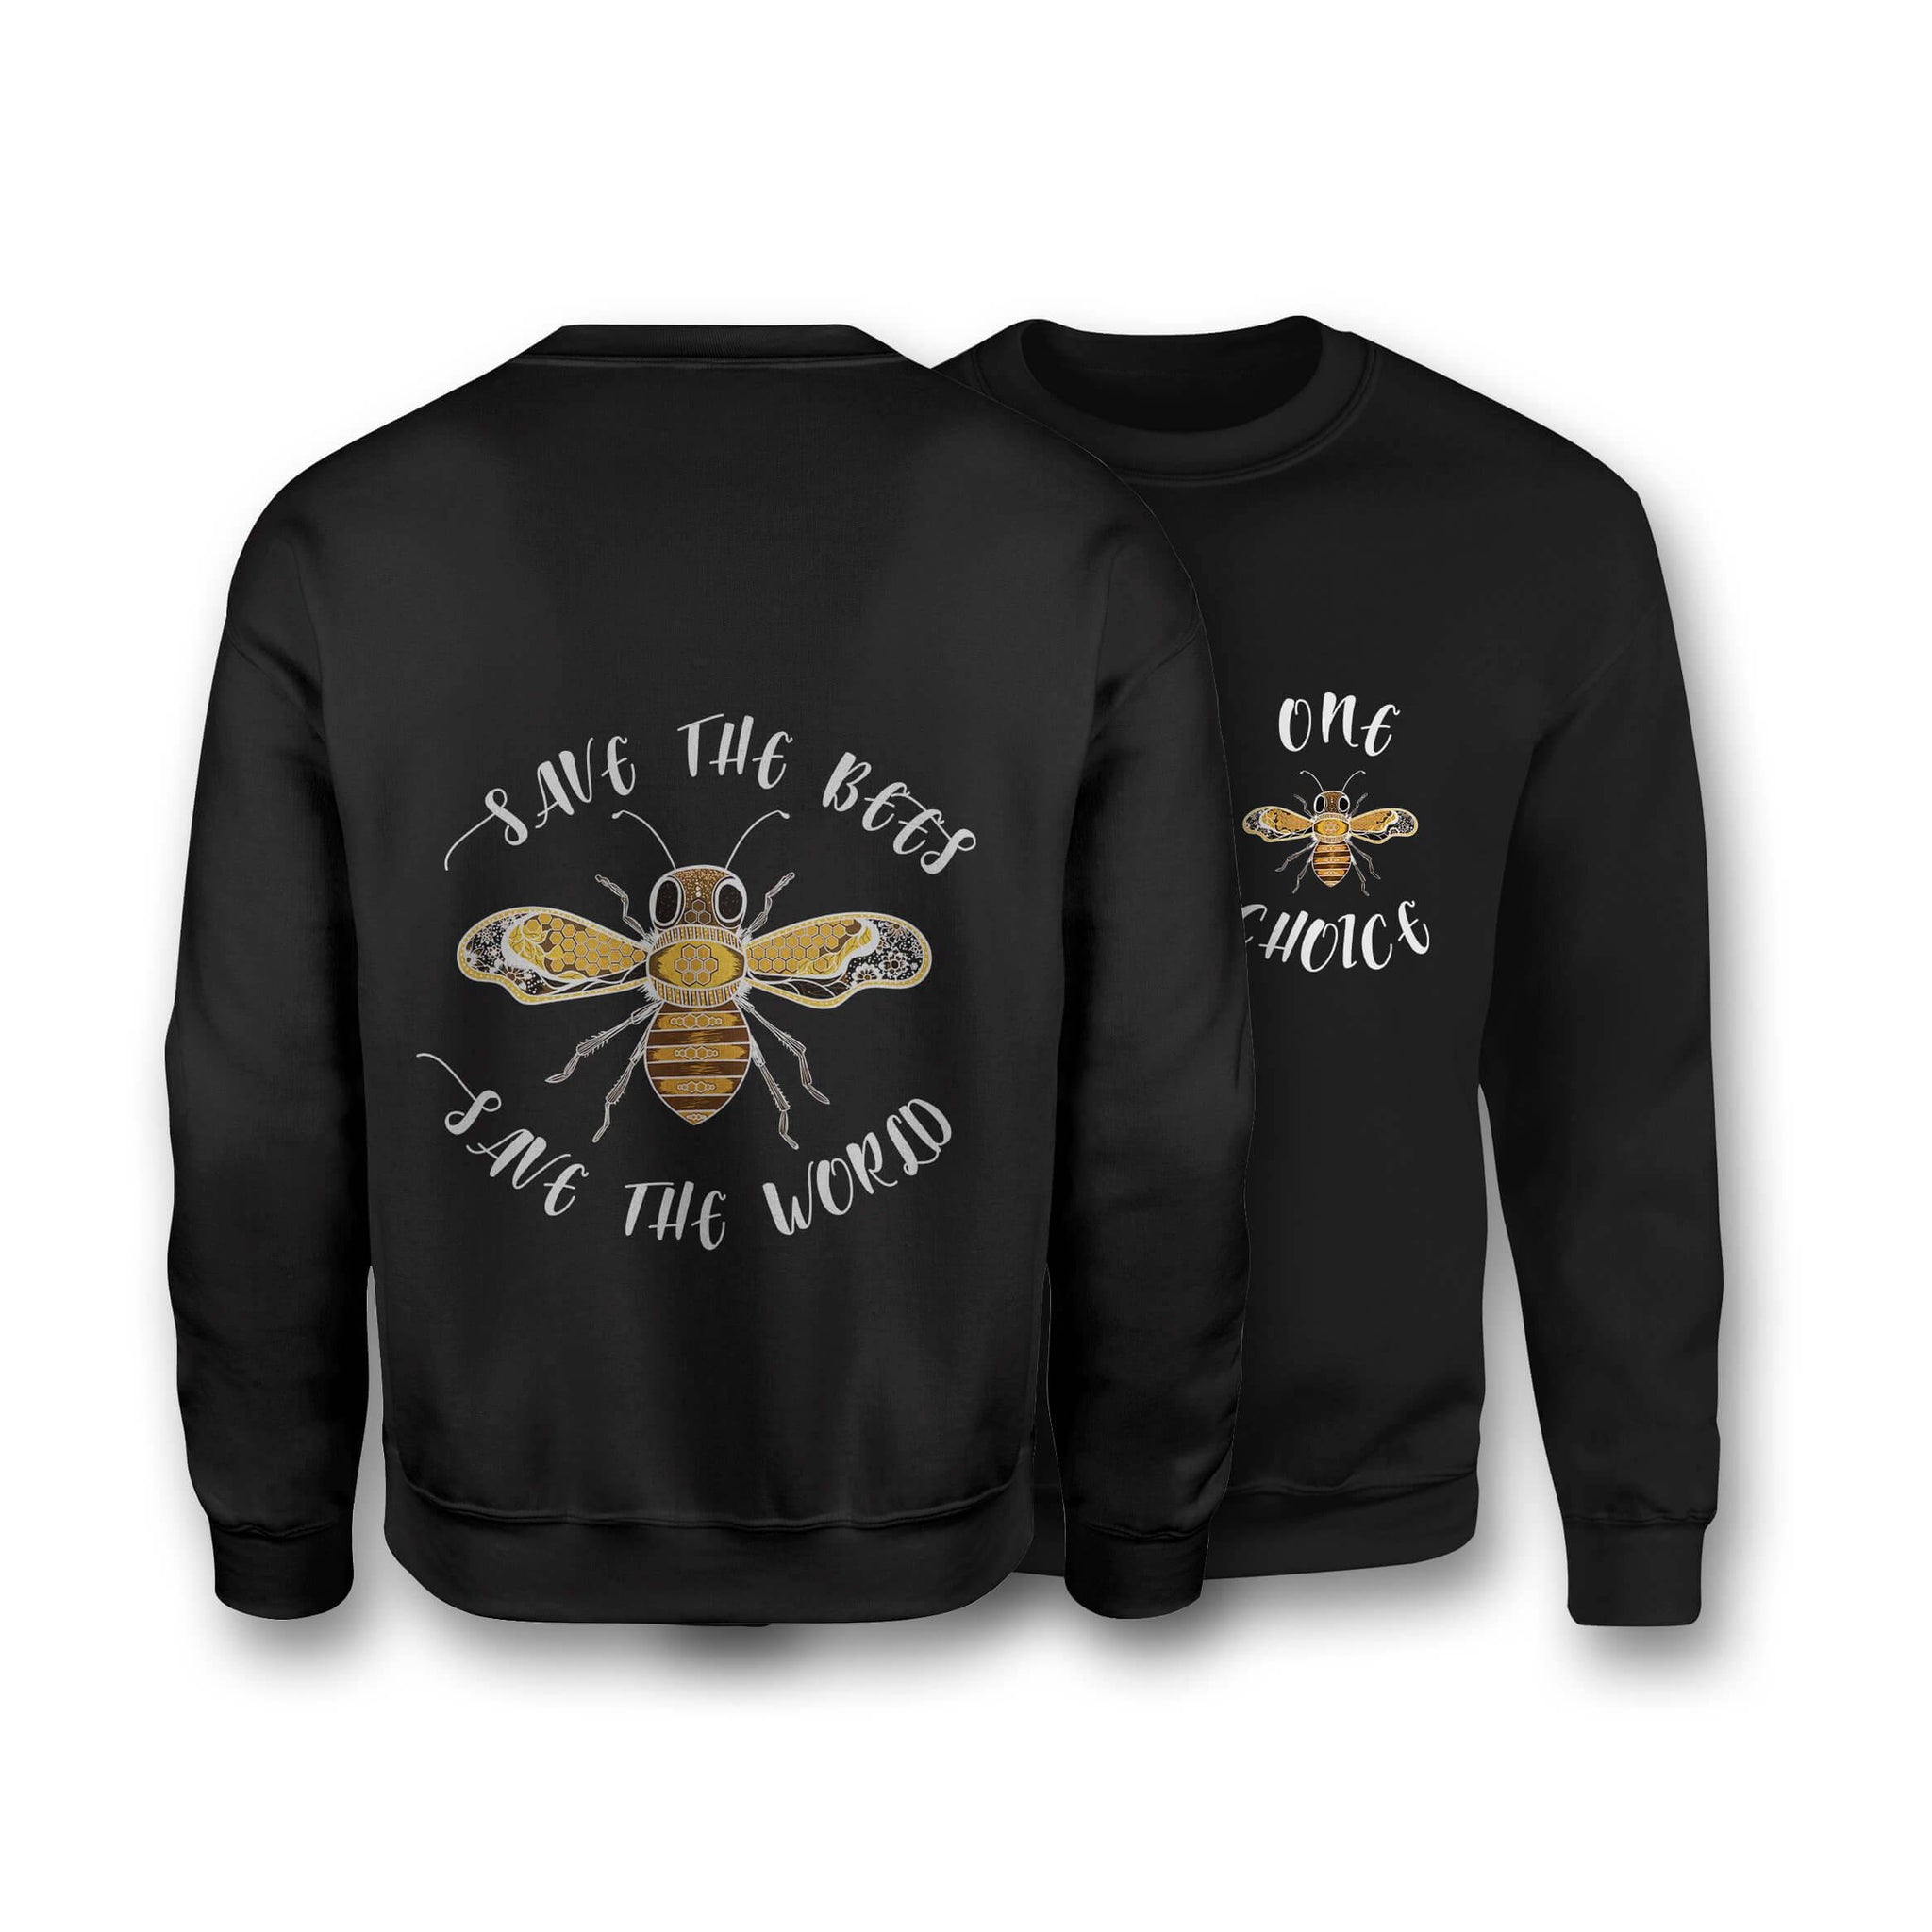 Save The Bees, Save The World Sweatshirt - Organic Cotton Sweatshirt - One Choice Apparel